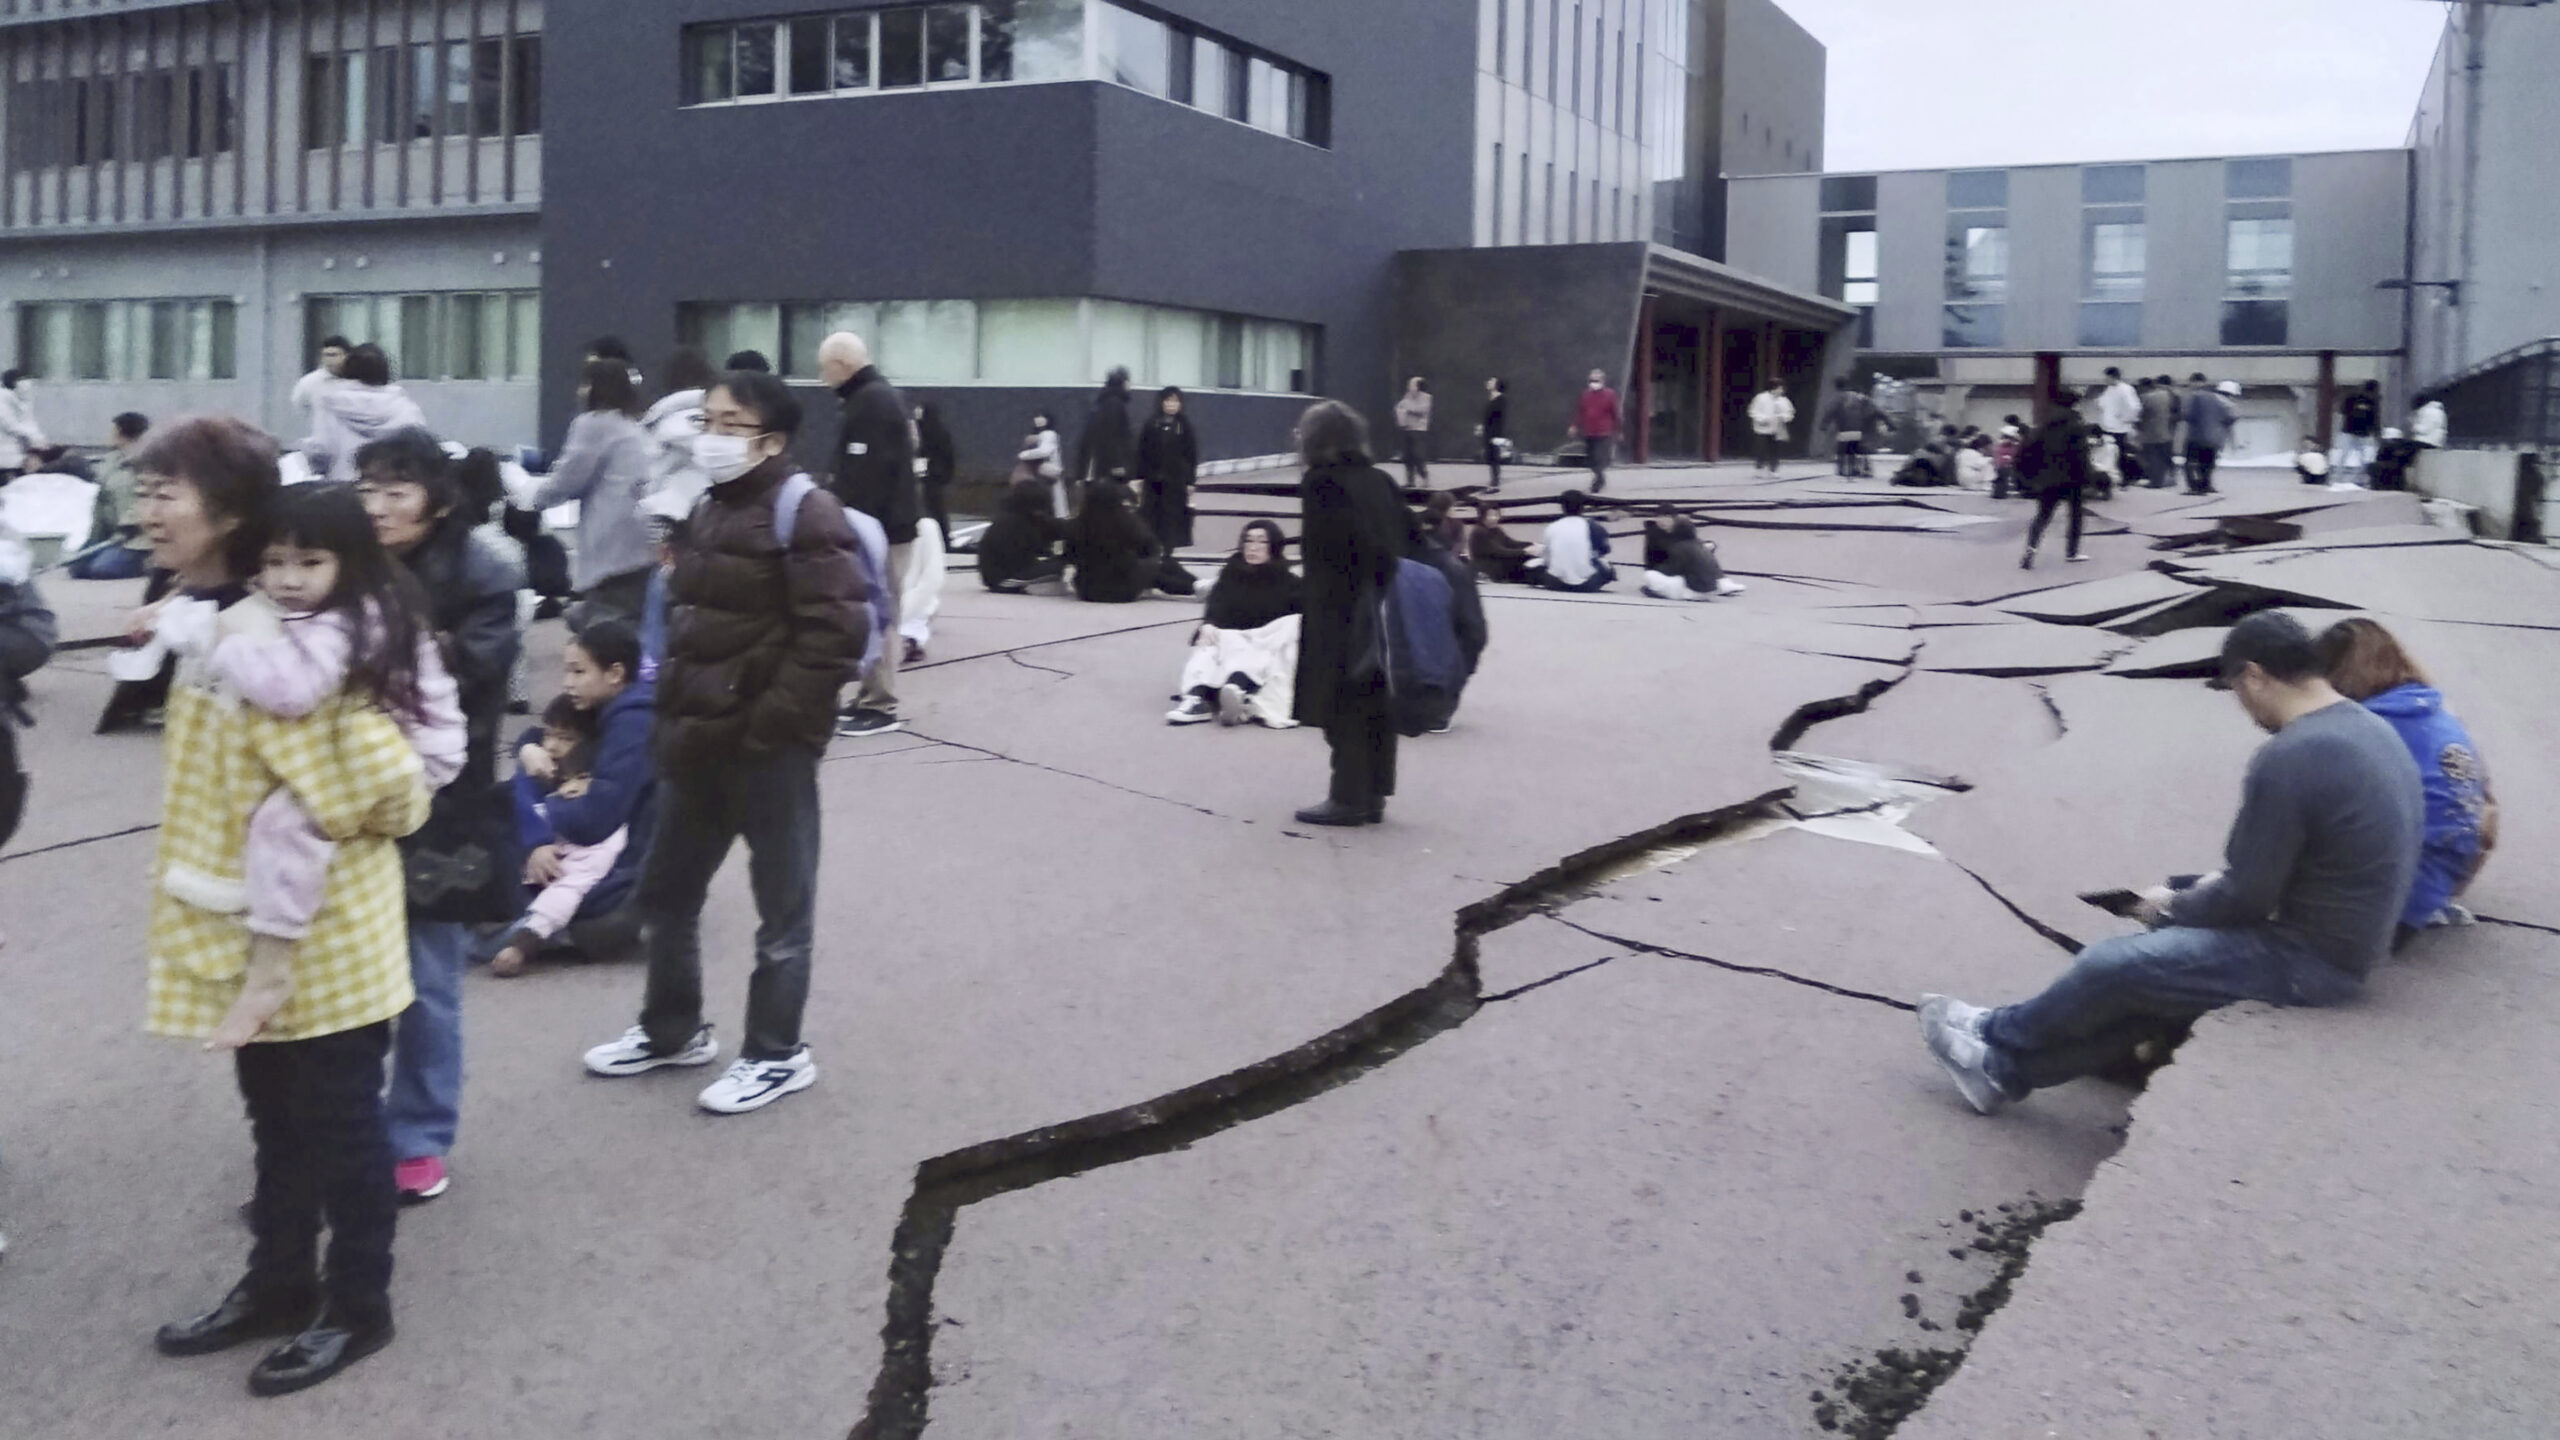 Cracks are seen on the ground in Wajima, Ishikawa prefecture, Japan on Monday following an earthquake. Japan issued